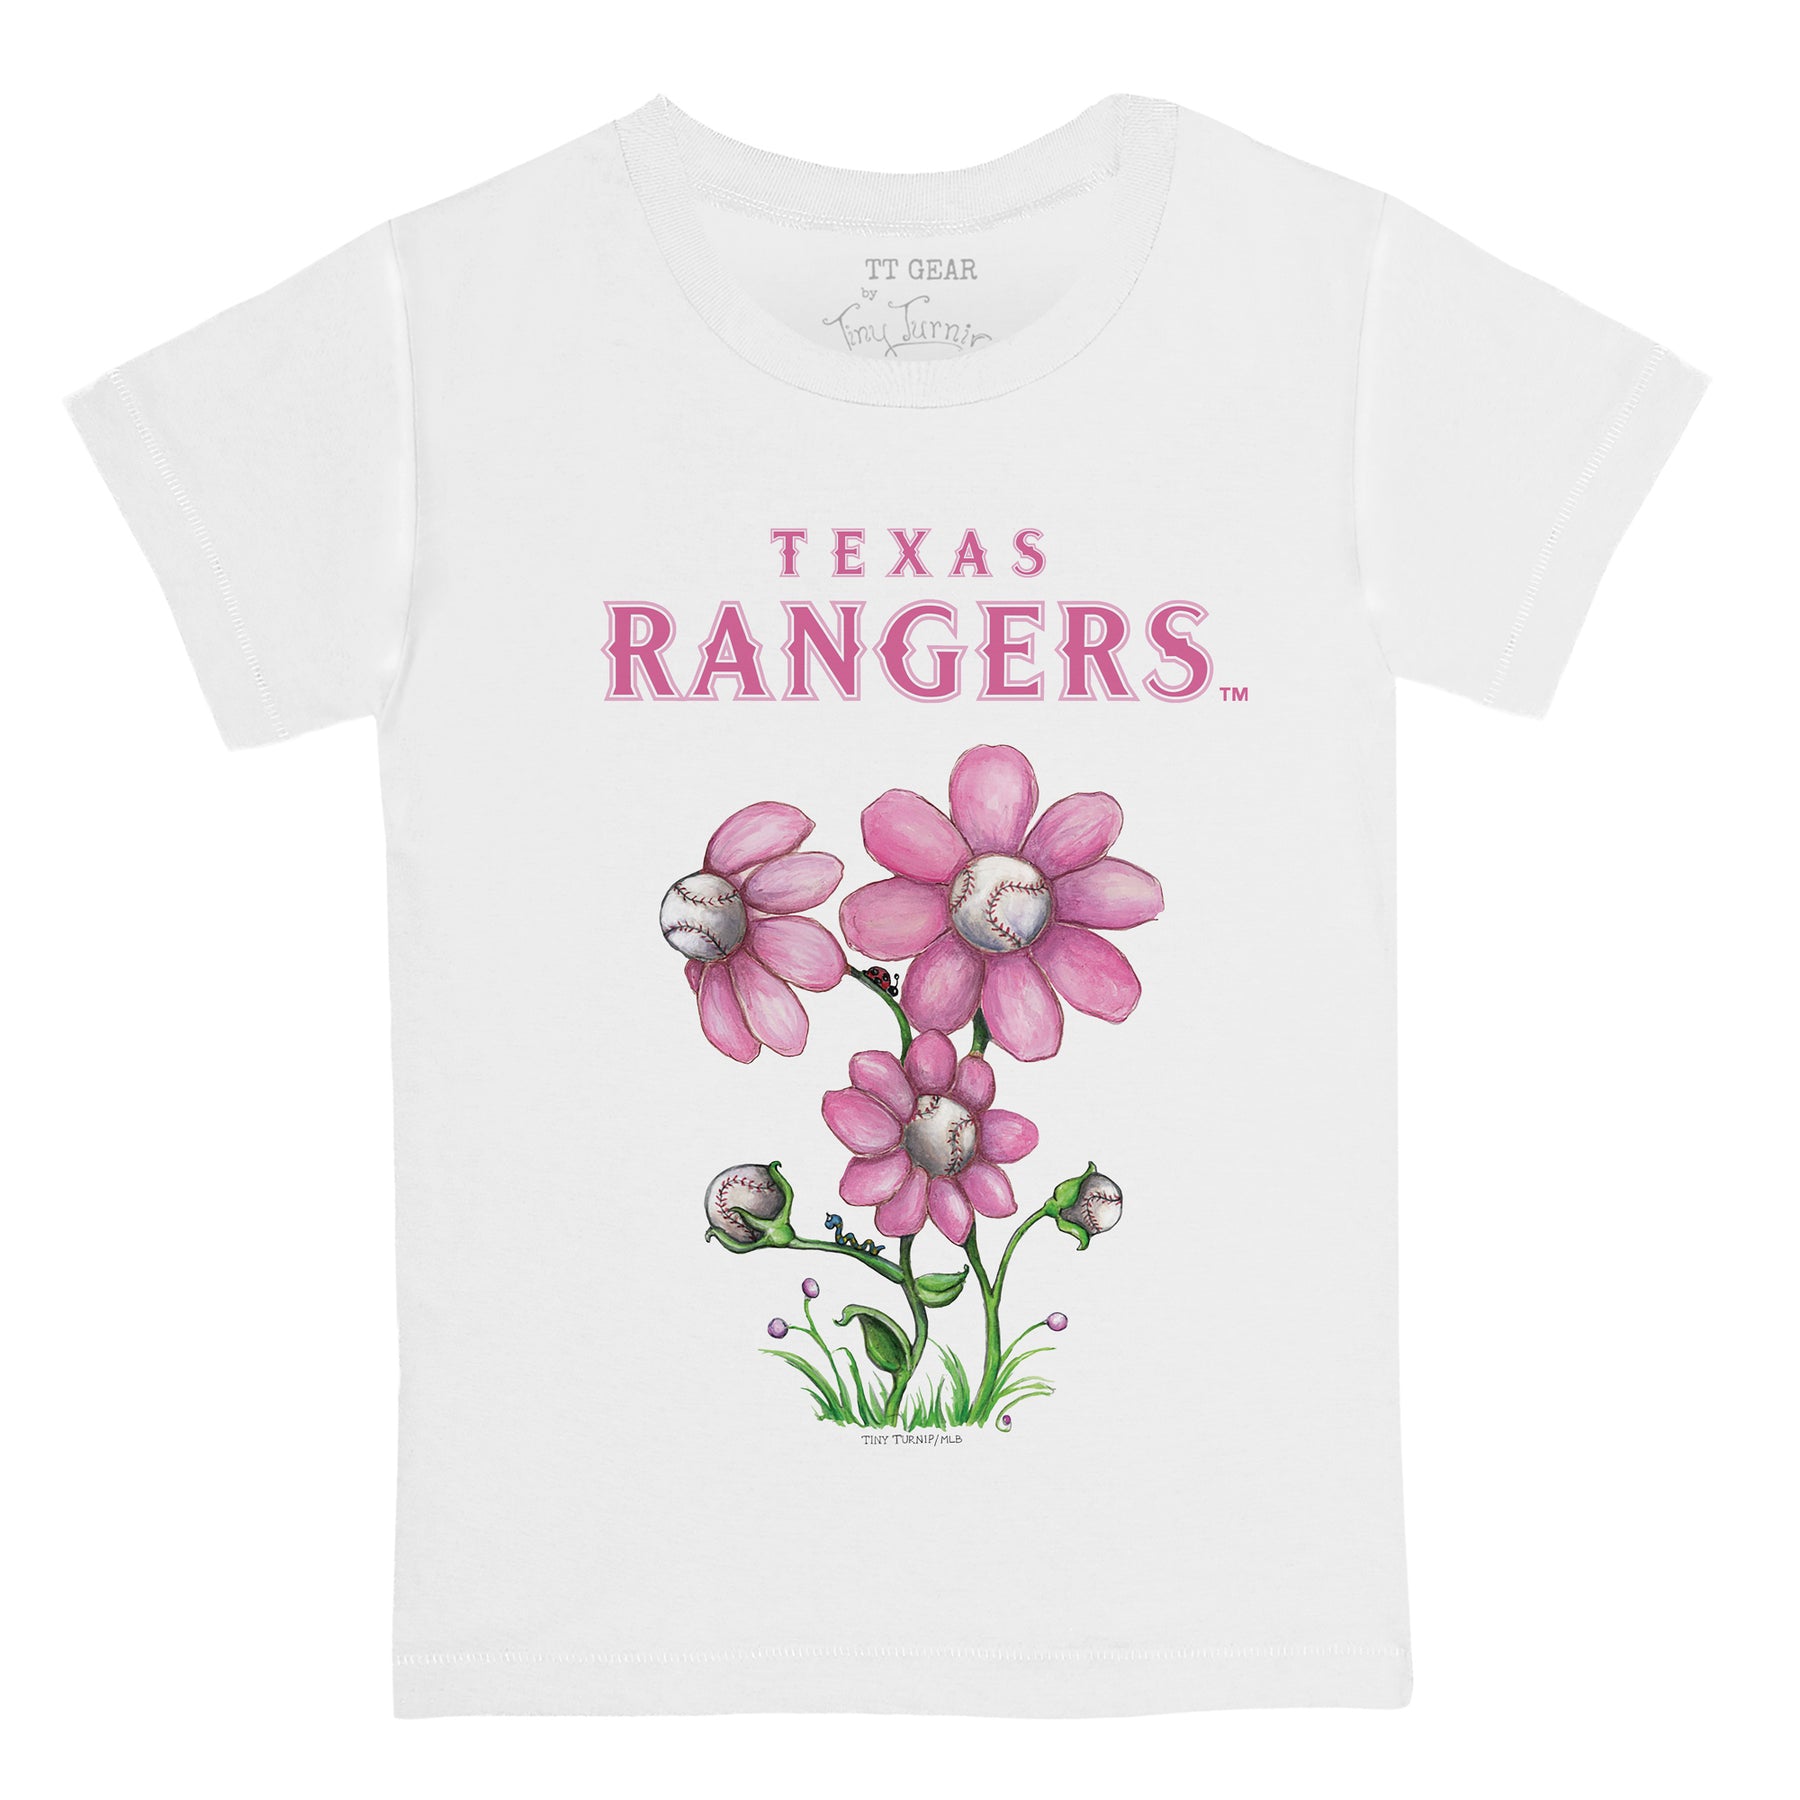 Texas Rangers Blooming Baseballs Tee Shirt